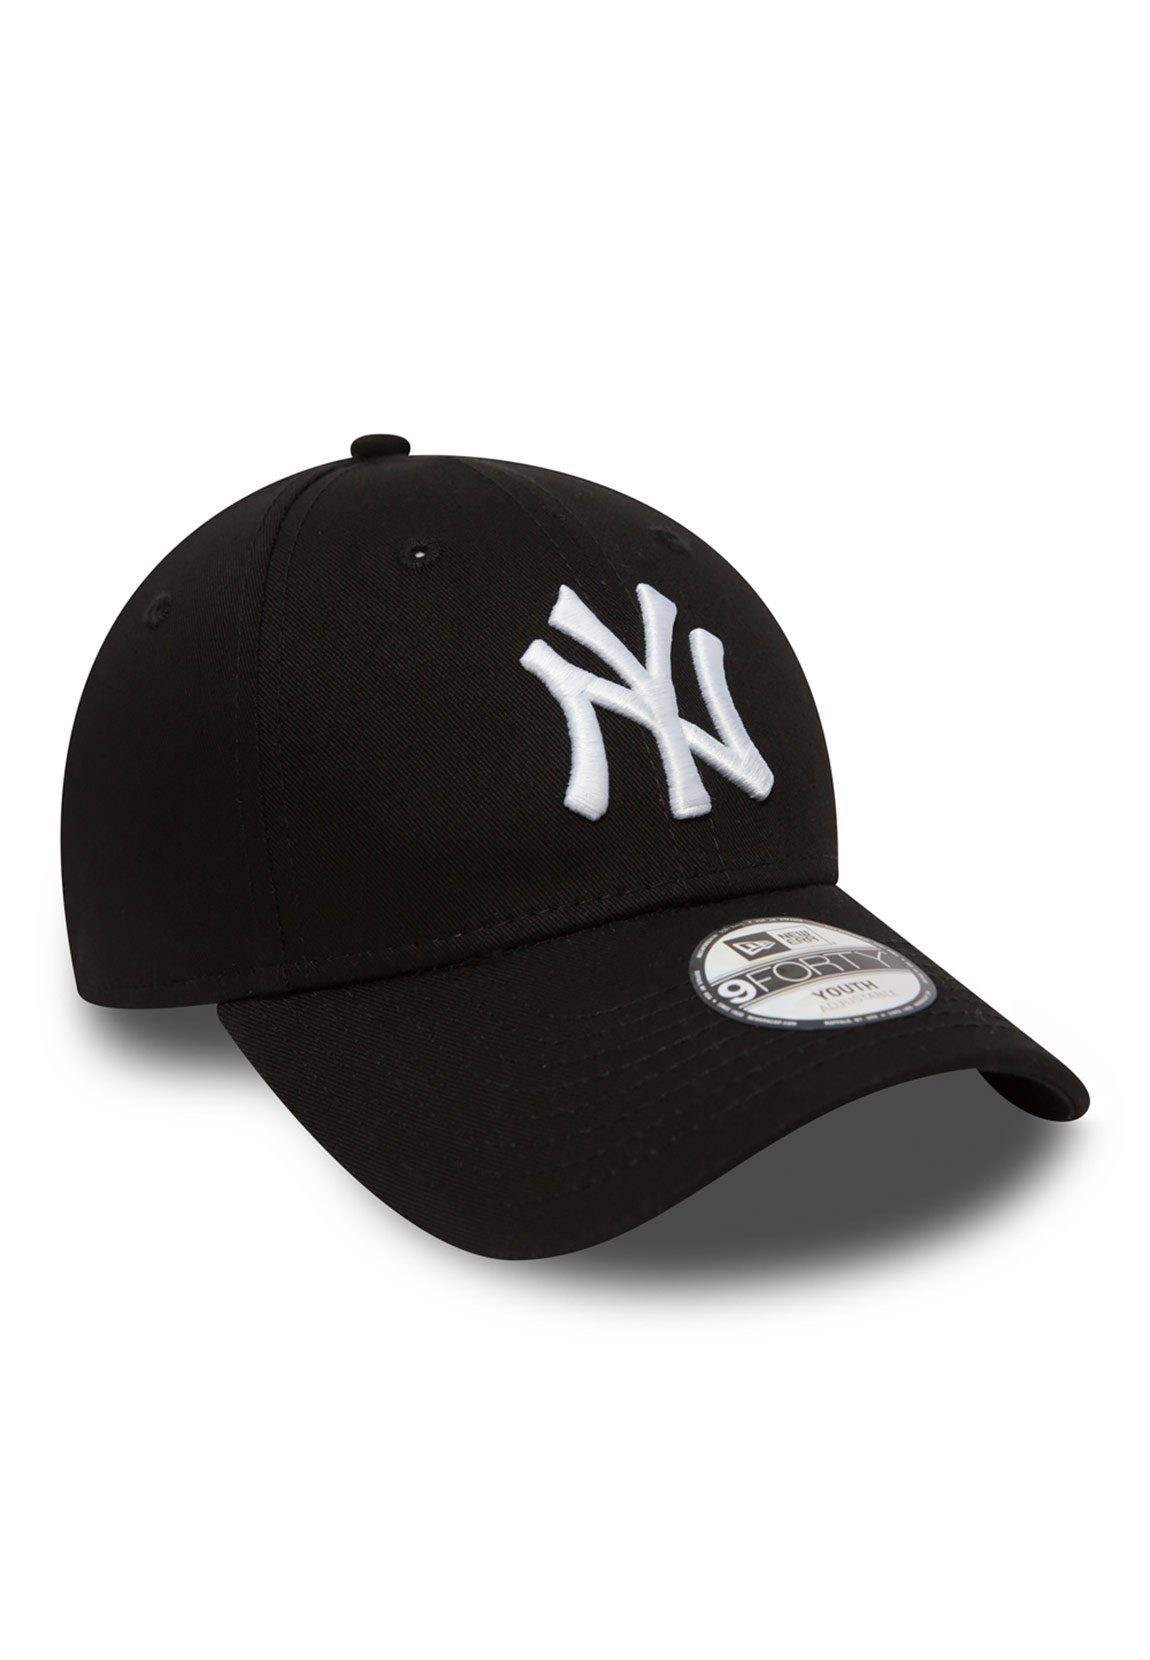 New Era Baseball Cap New NY Cap - Black-White Schwarz/Weiß Adjustables Kids Era - YANKEES